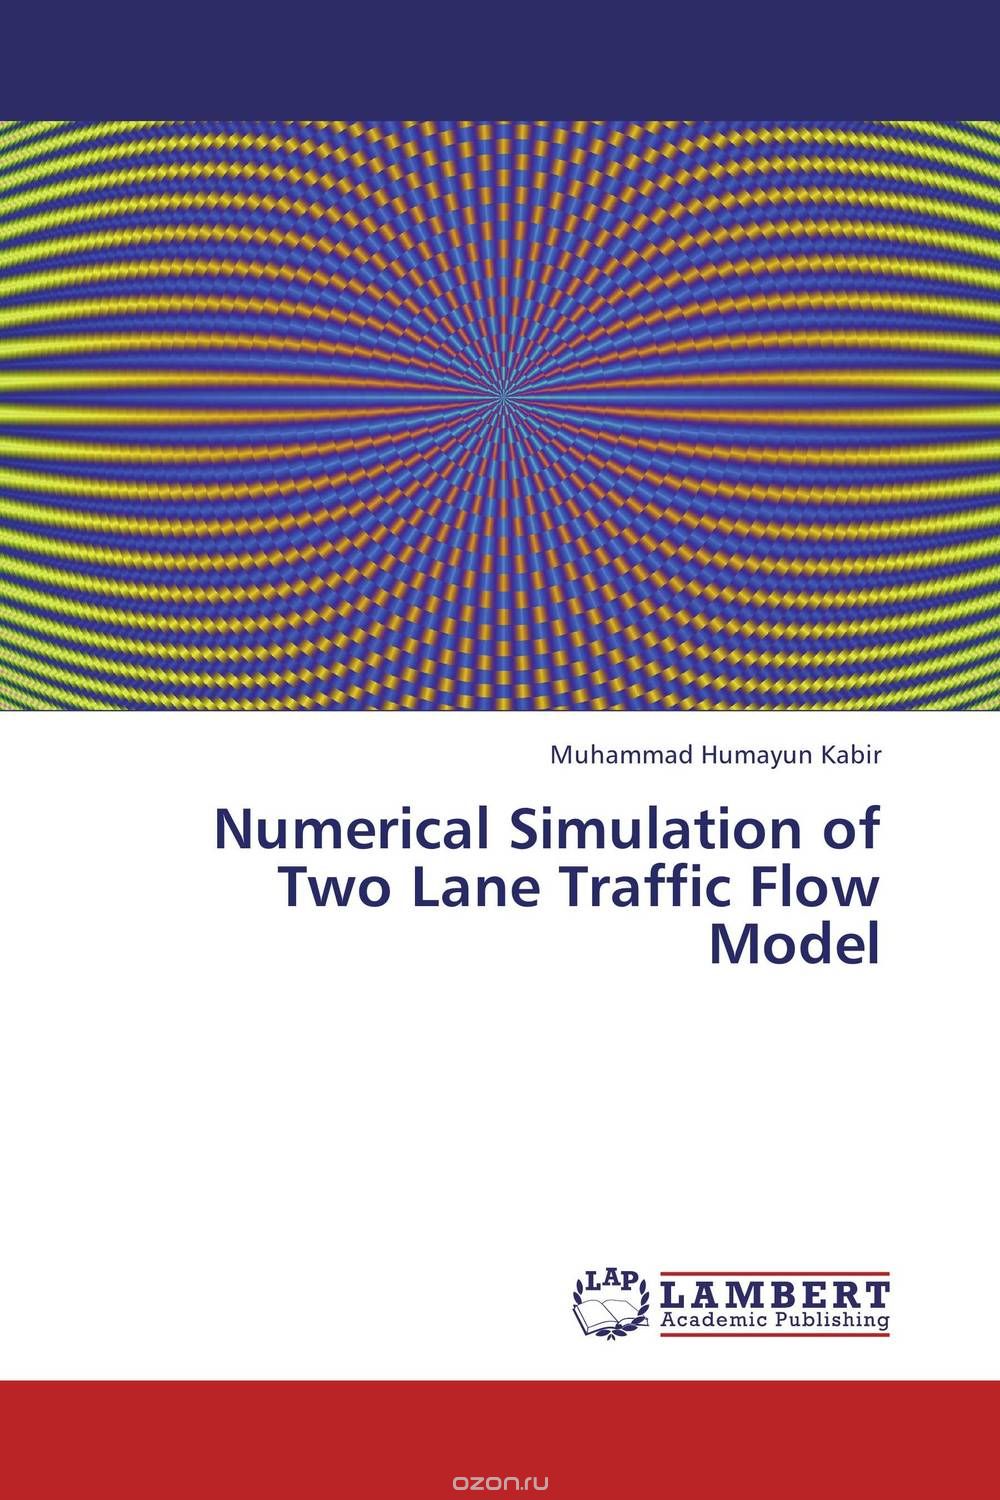 Скачать книгу "Numerical Simulation of Two Lane Traffic Flow Model"